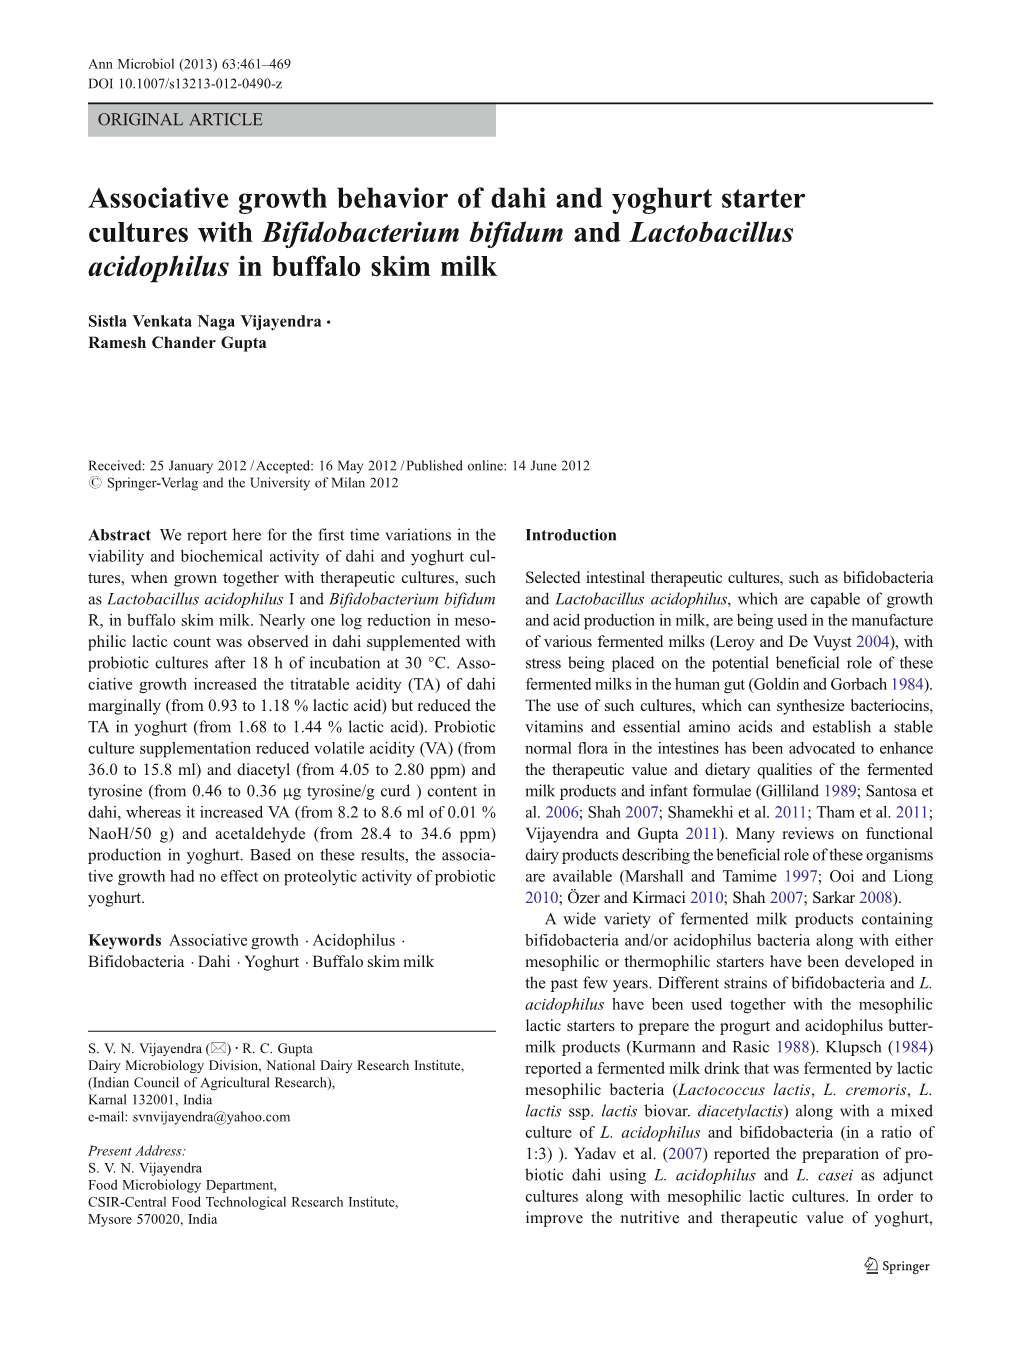 Associative Growth Behavior of Dahi and Yoghurt Starter Cultures with Bifidobacterium Bifidum and Lactobacillus Acidophilus in Buffalo Skim Milk